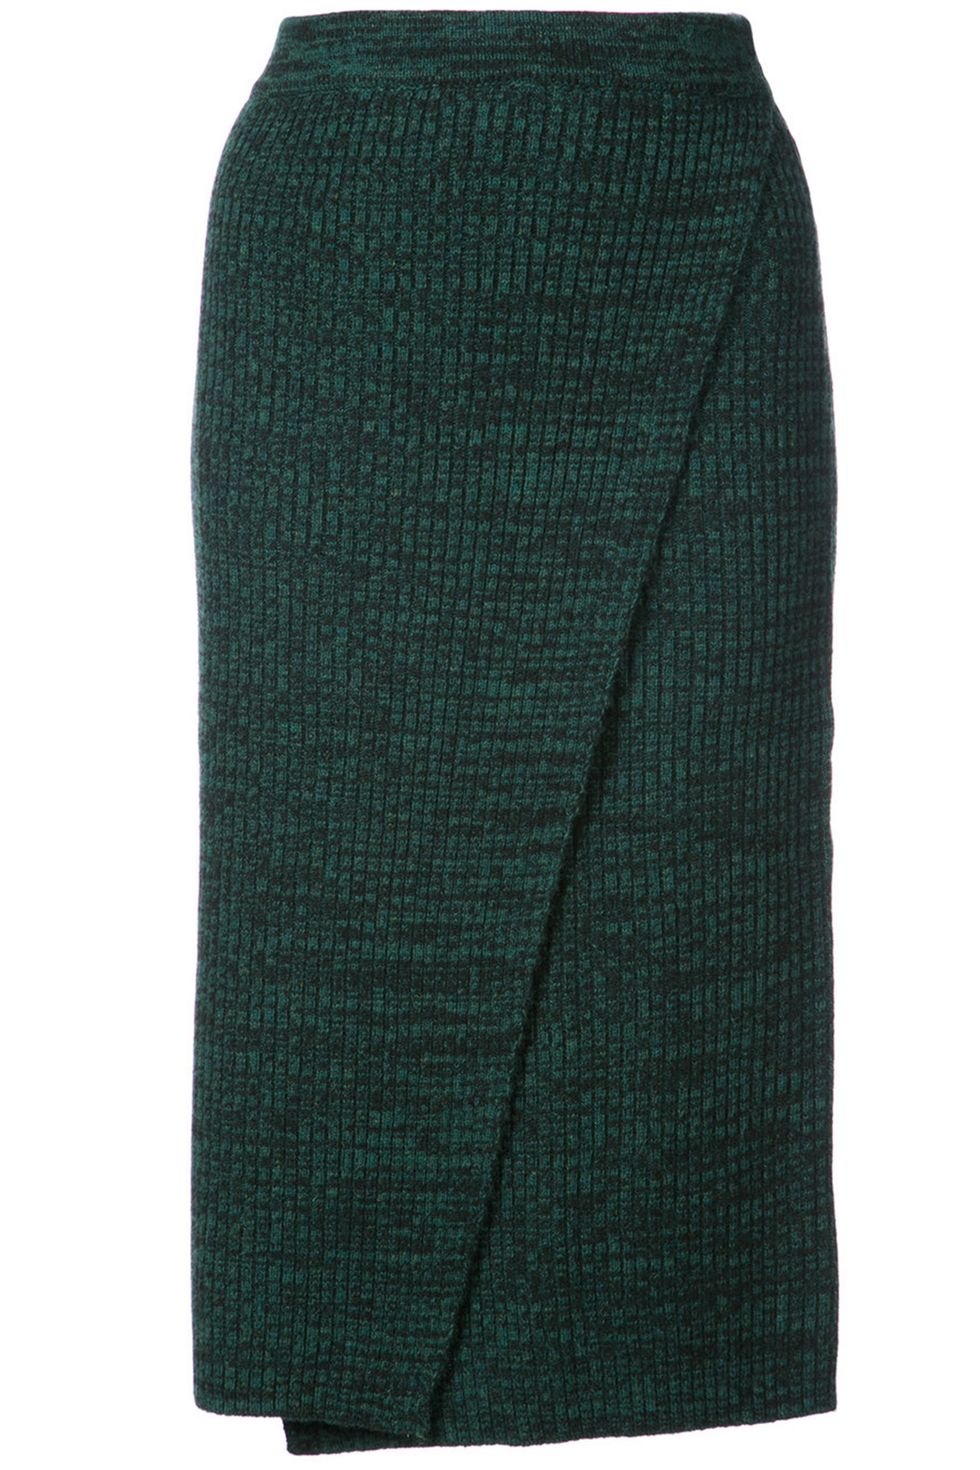 Green, Textile, Wool, Woolen, Teal, Black, Electric blue, Knitting, Woven fabric, Thread, 